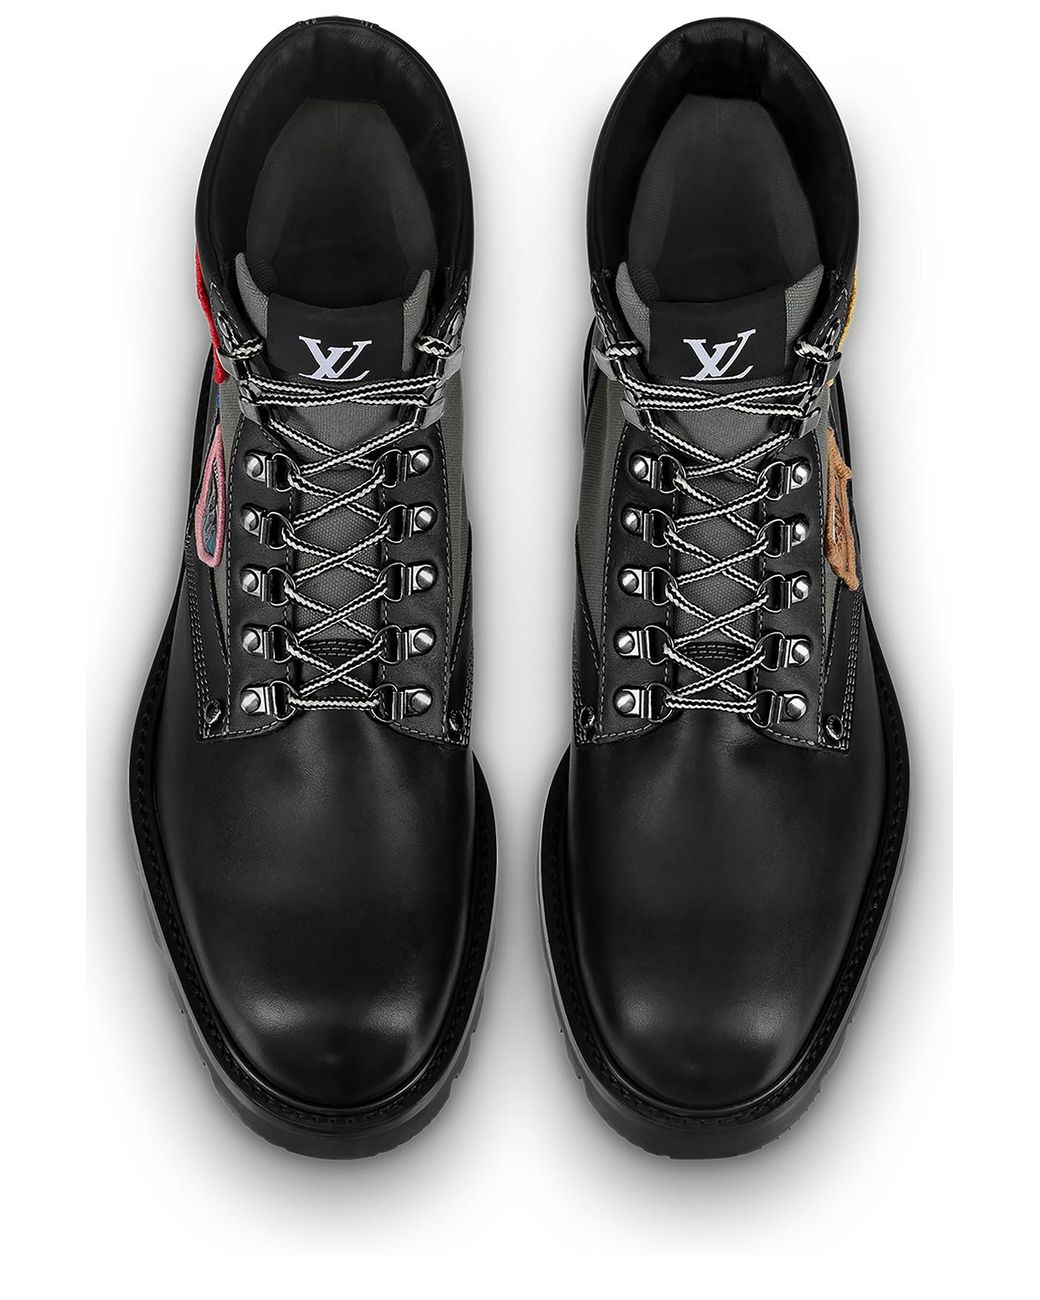 Louis Vuitton x NBA Oberkampf Ankle Boot Black Hombre - 1A8EMU - US